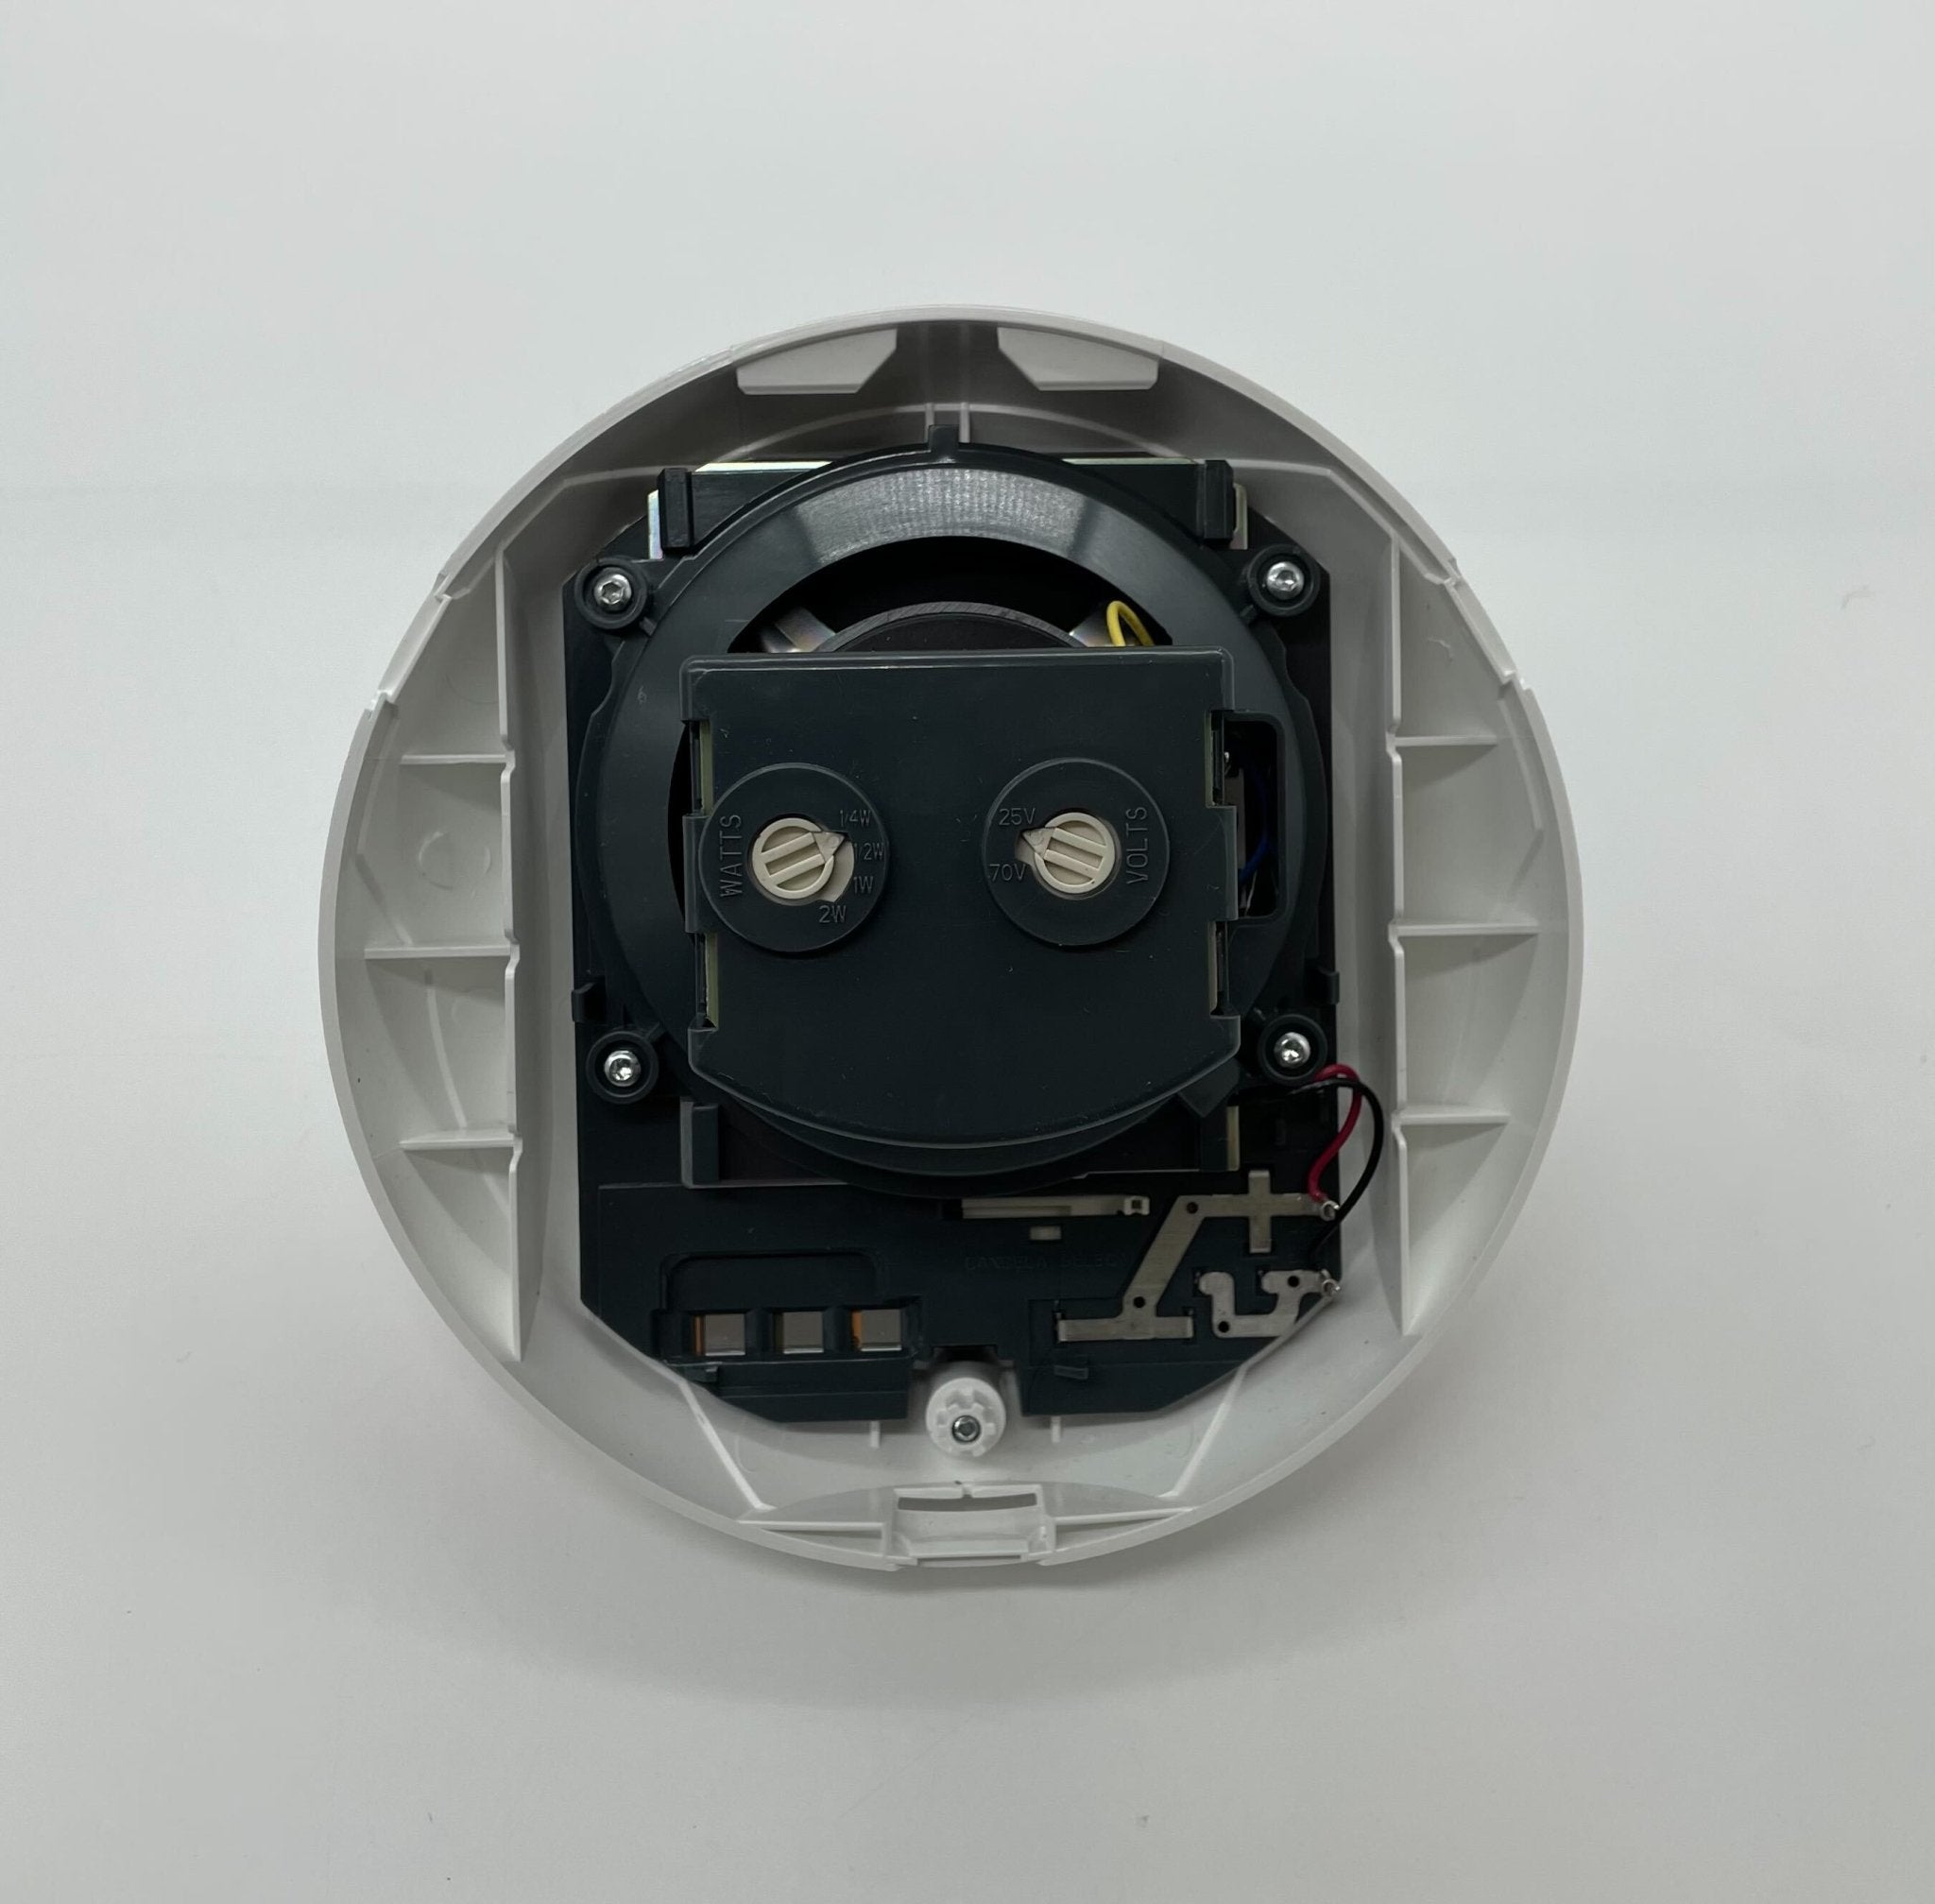 System Sensor SPSCWL-CLR-ALERT - The Fire Alarm Supplier